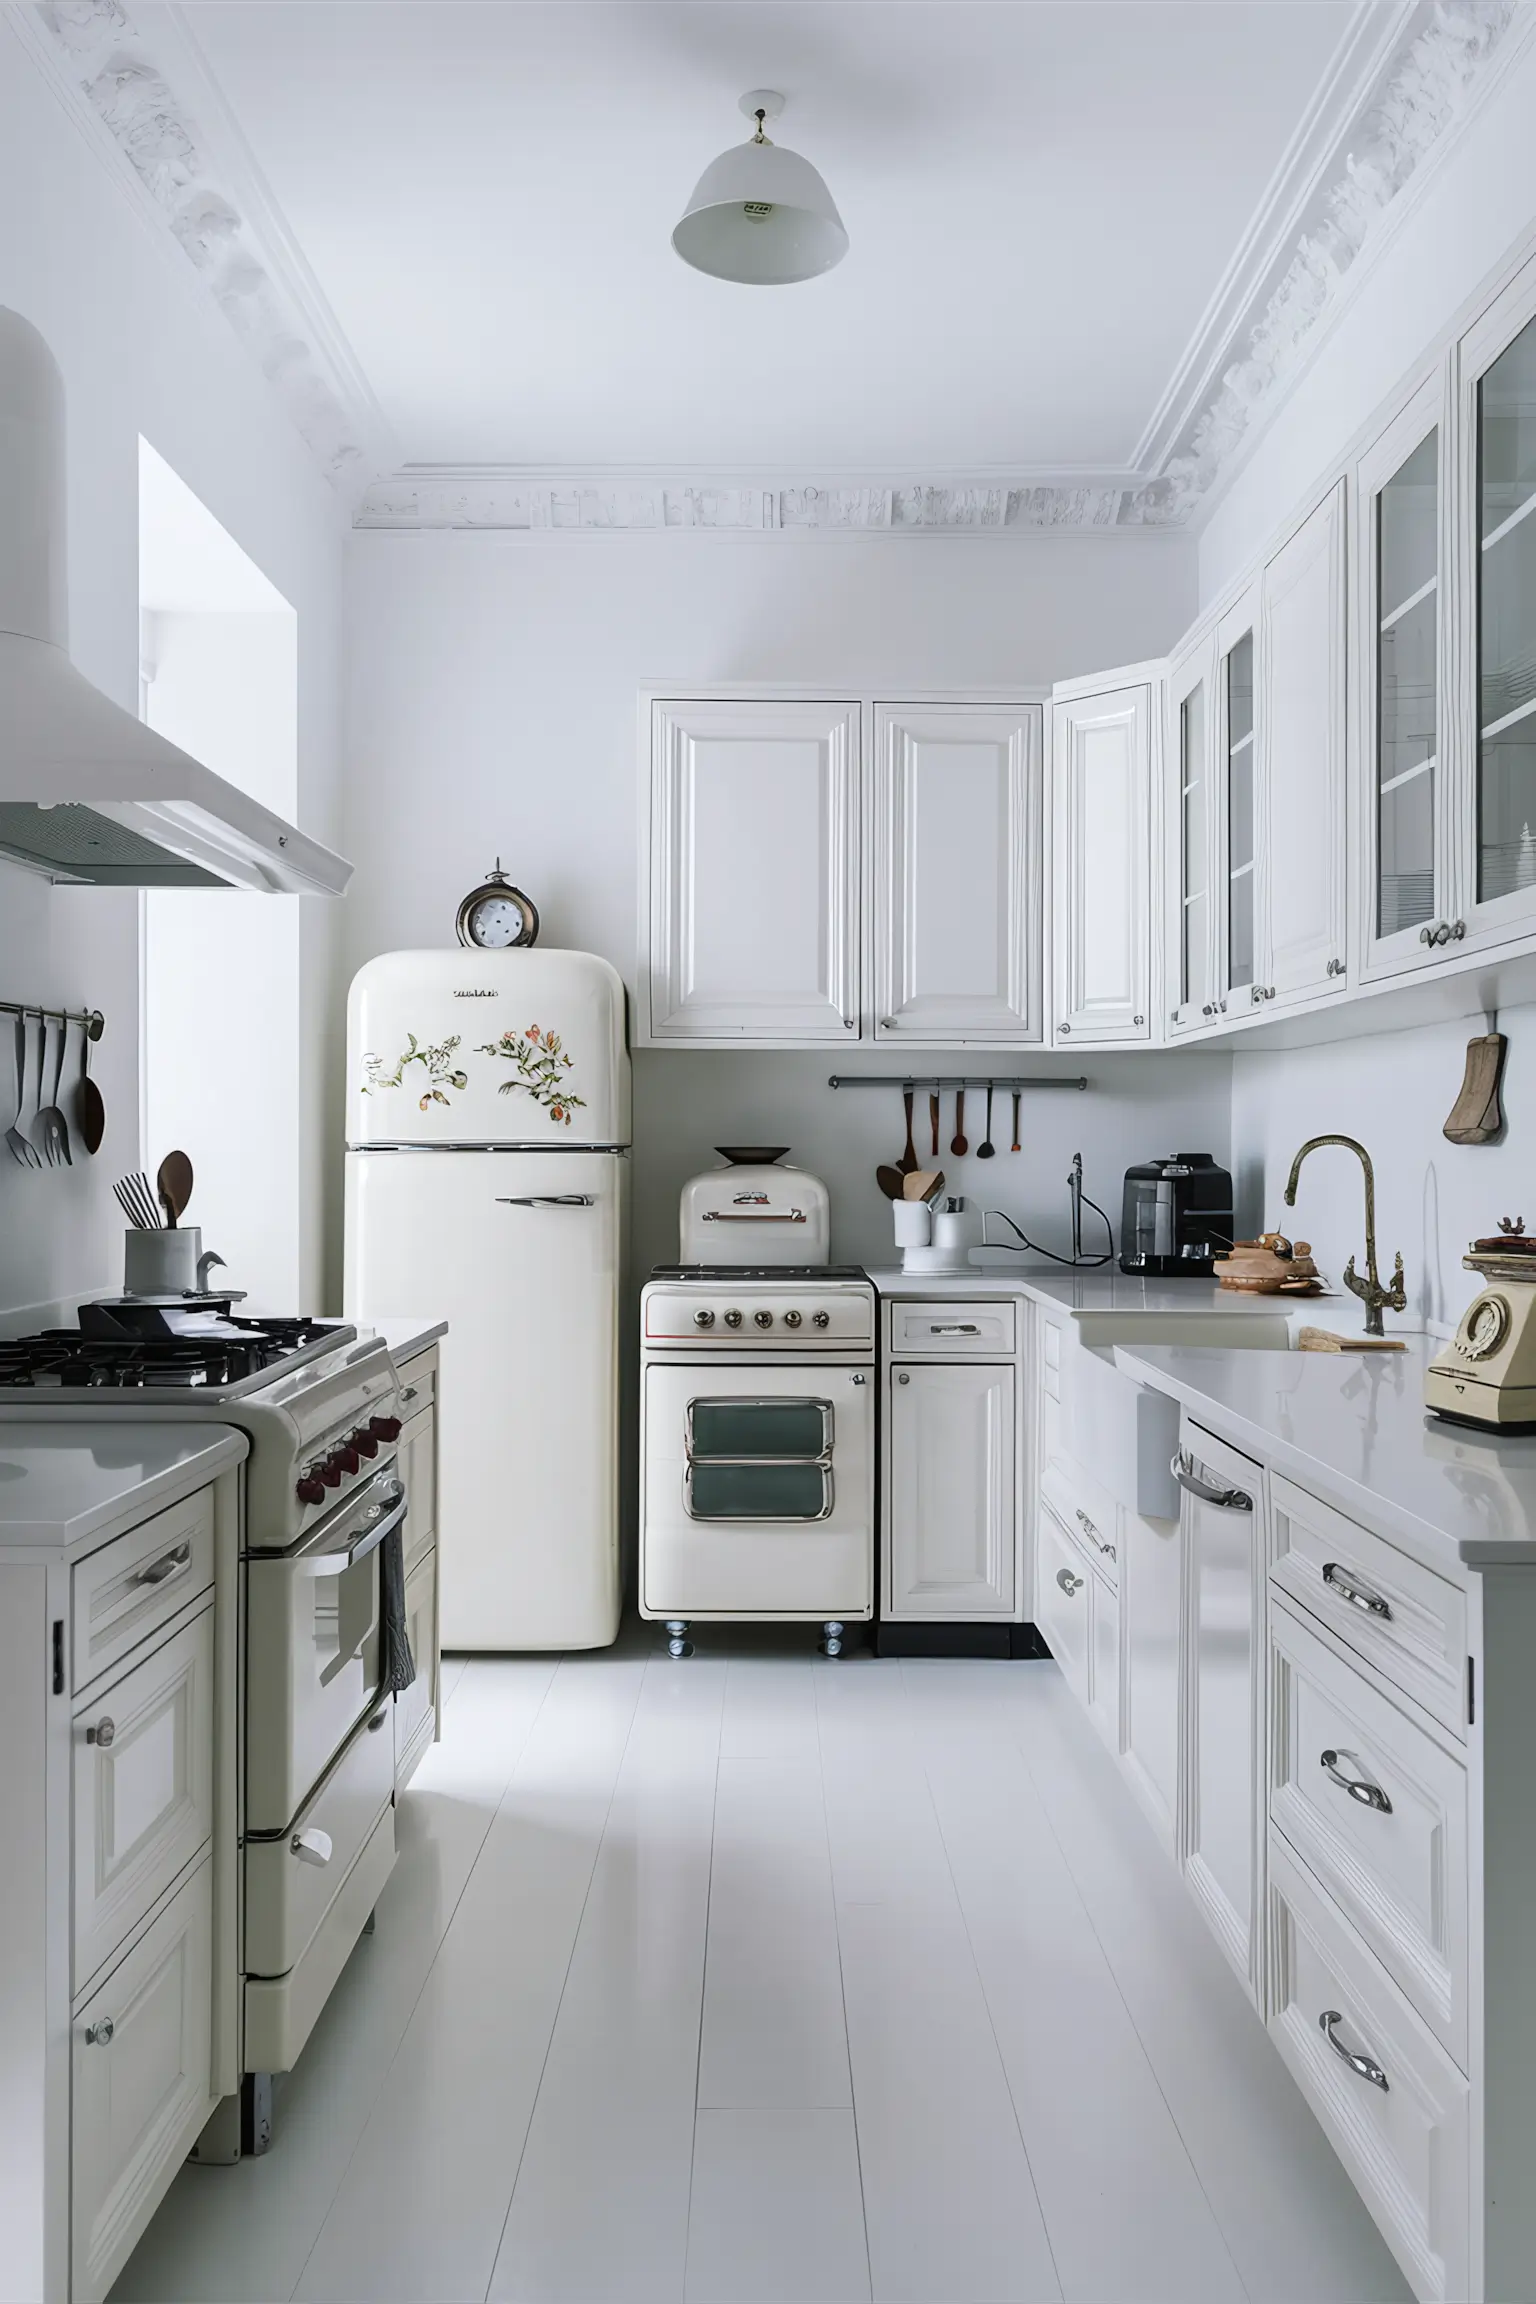 Minimalistic white kitchen with vintage charm and retro appliances.